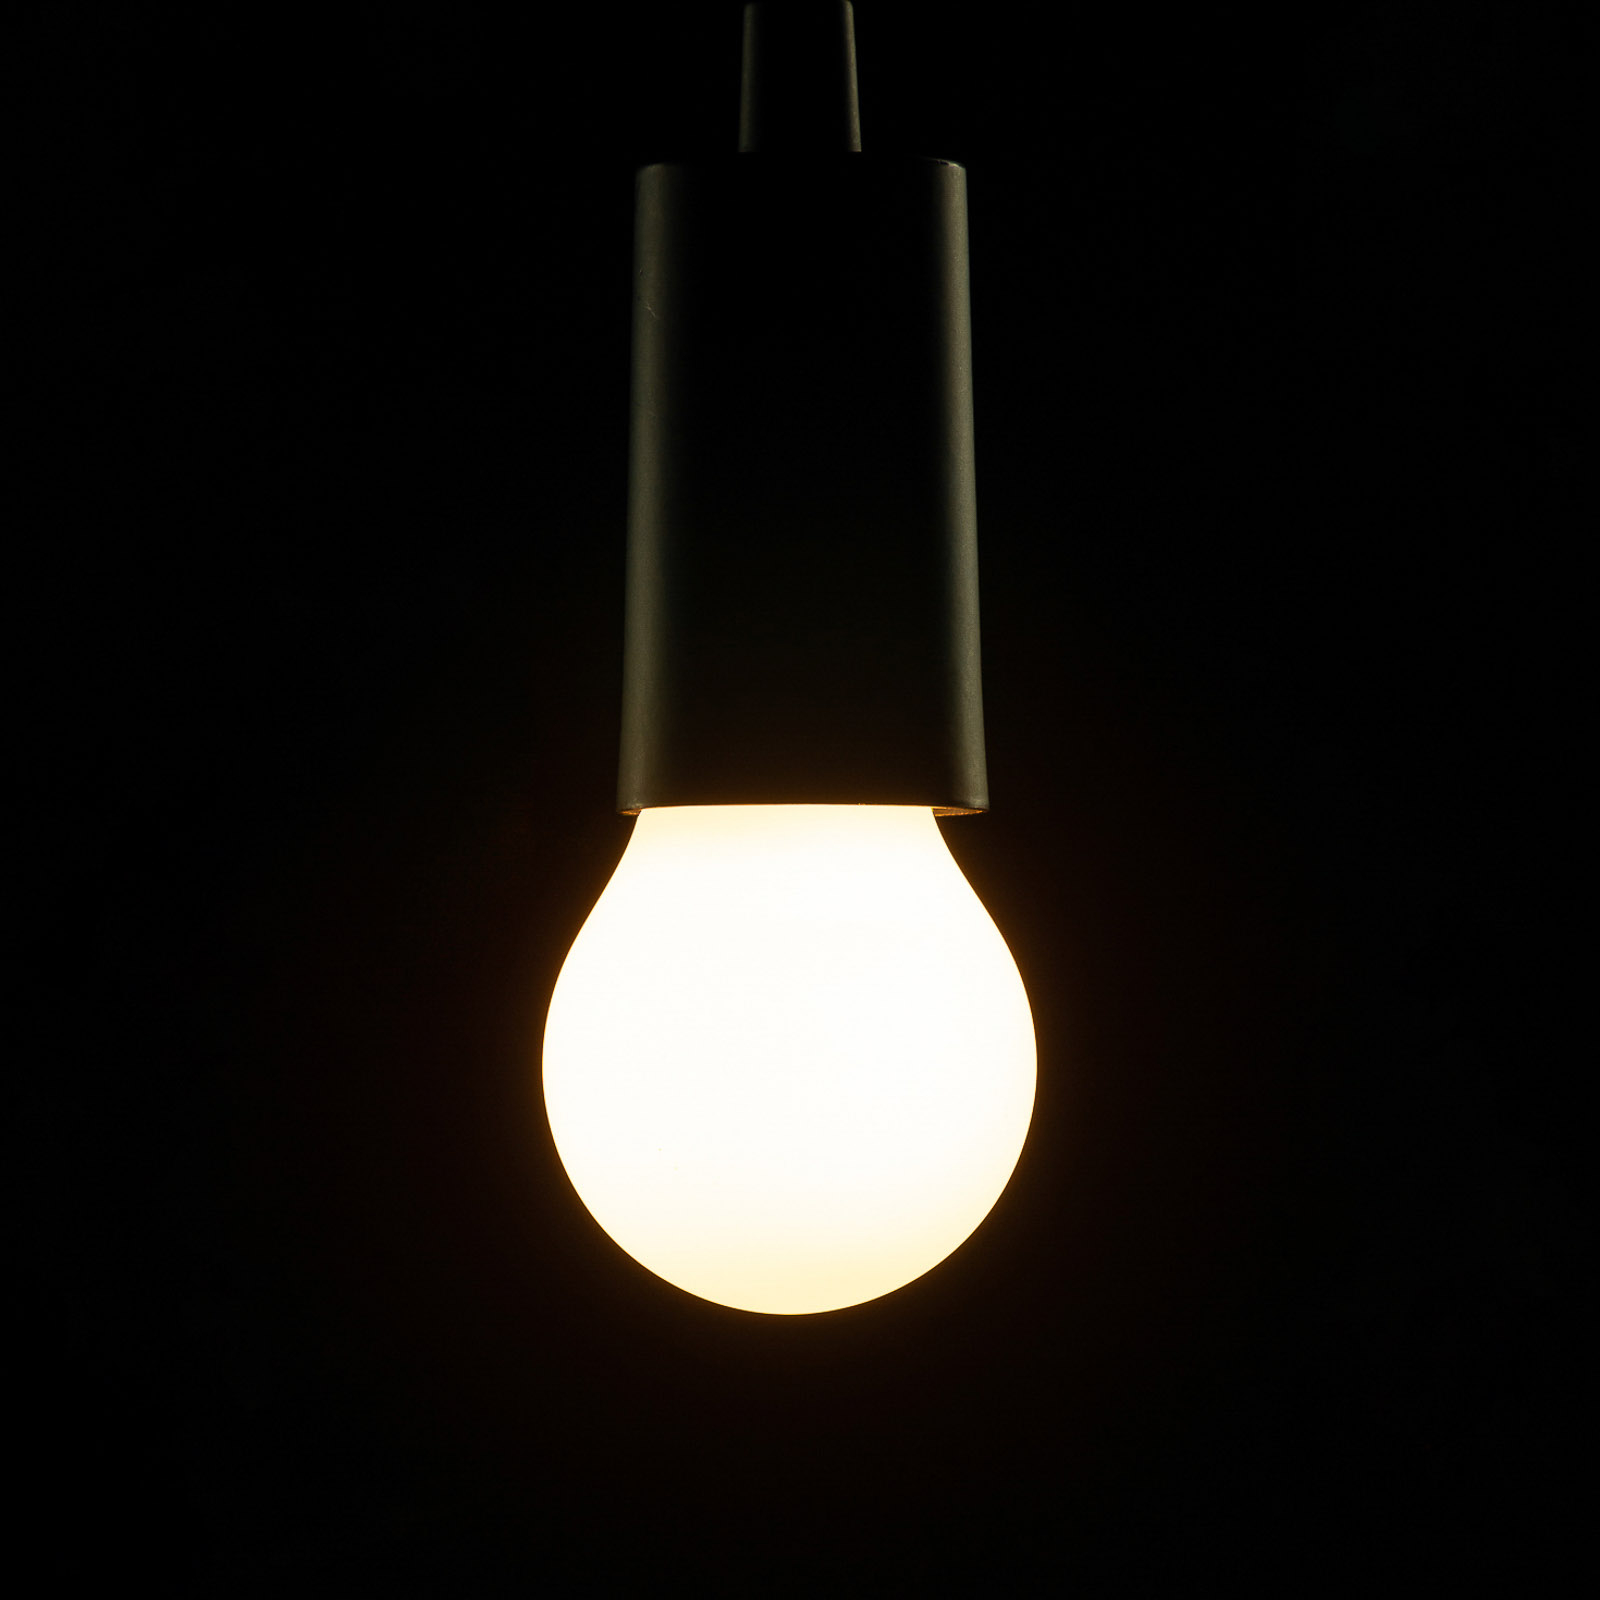 SEGULA LED-Lampe E27 5 W opal ambient dimming